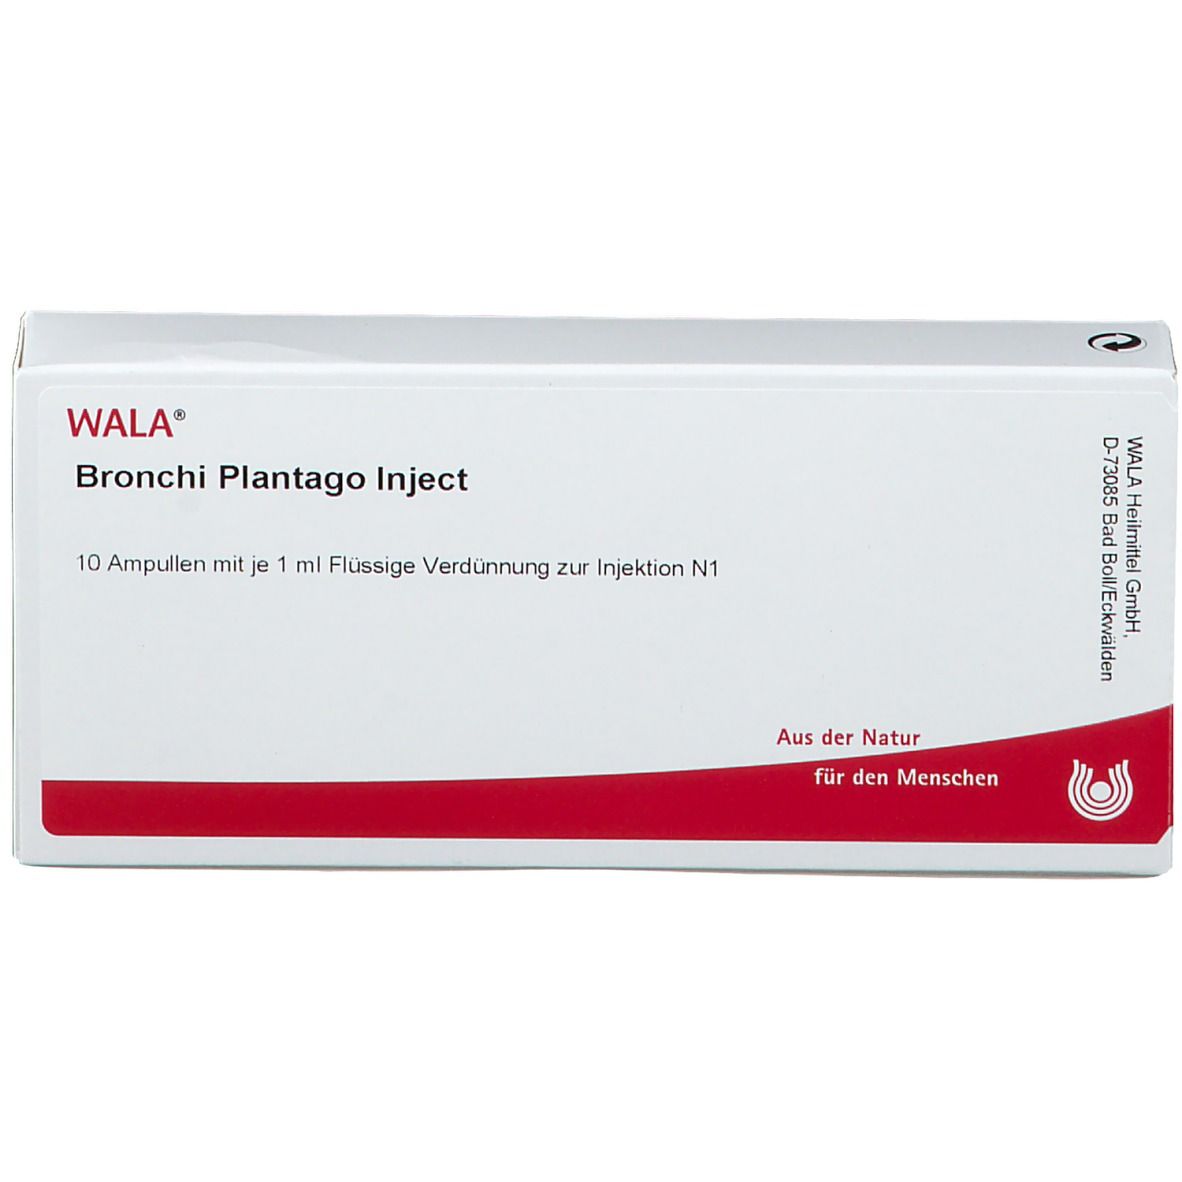 WALA® Bronchi Plantago Inject Amp.